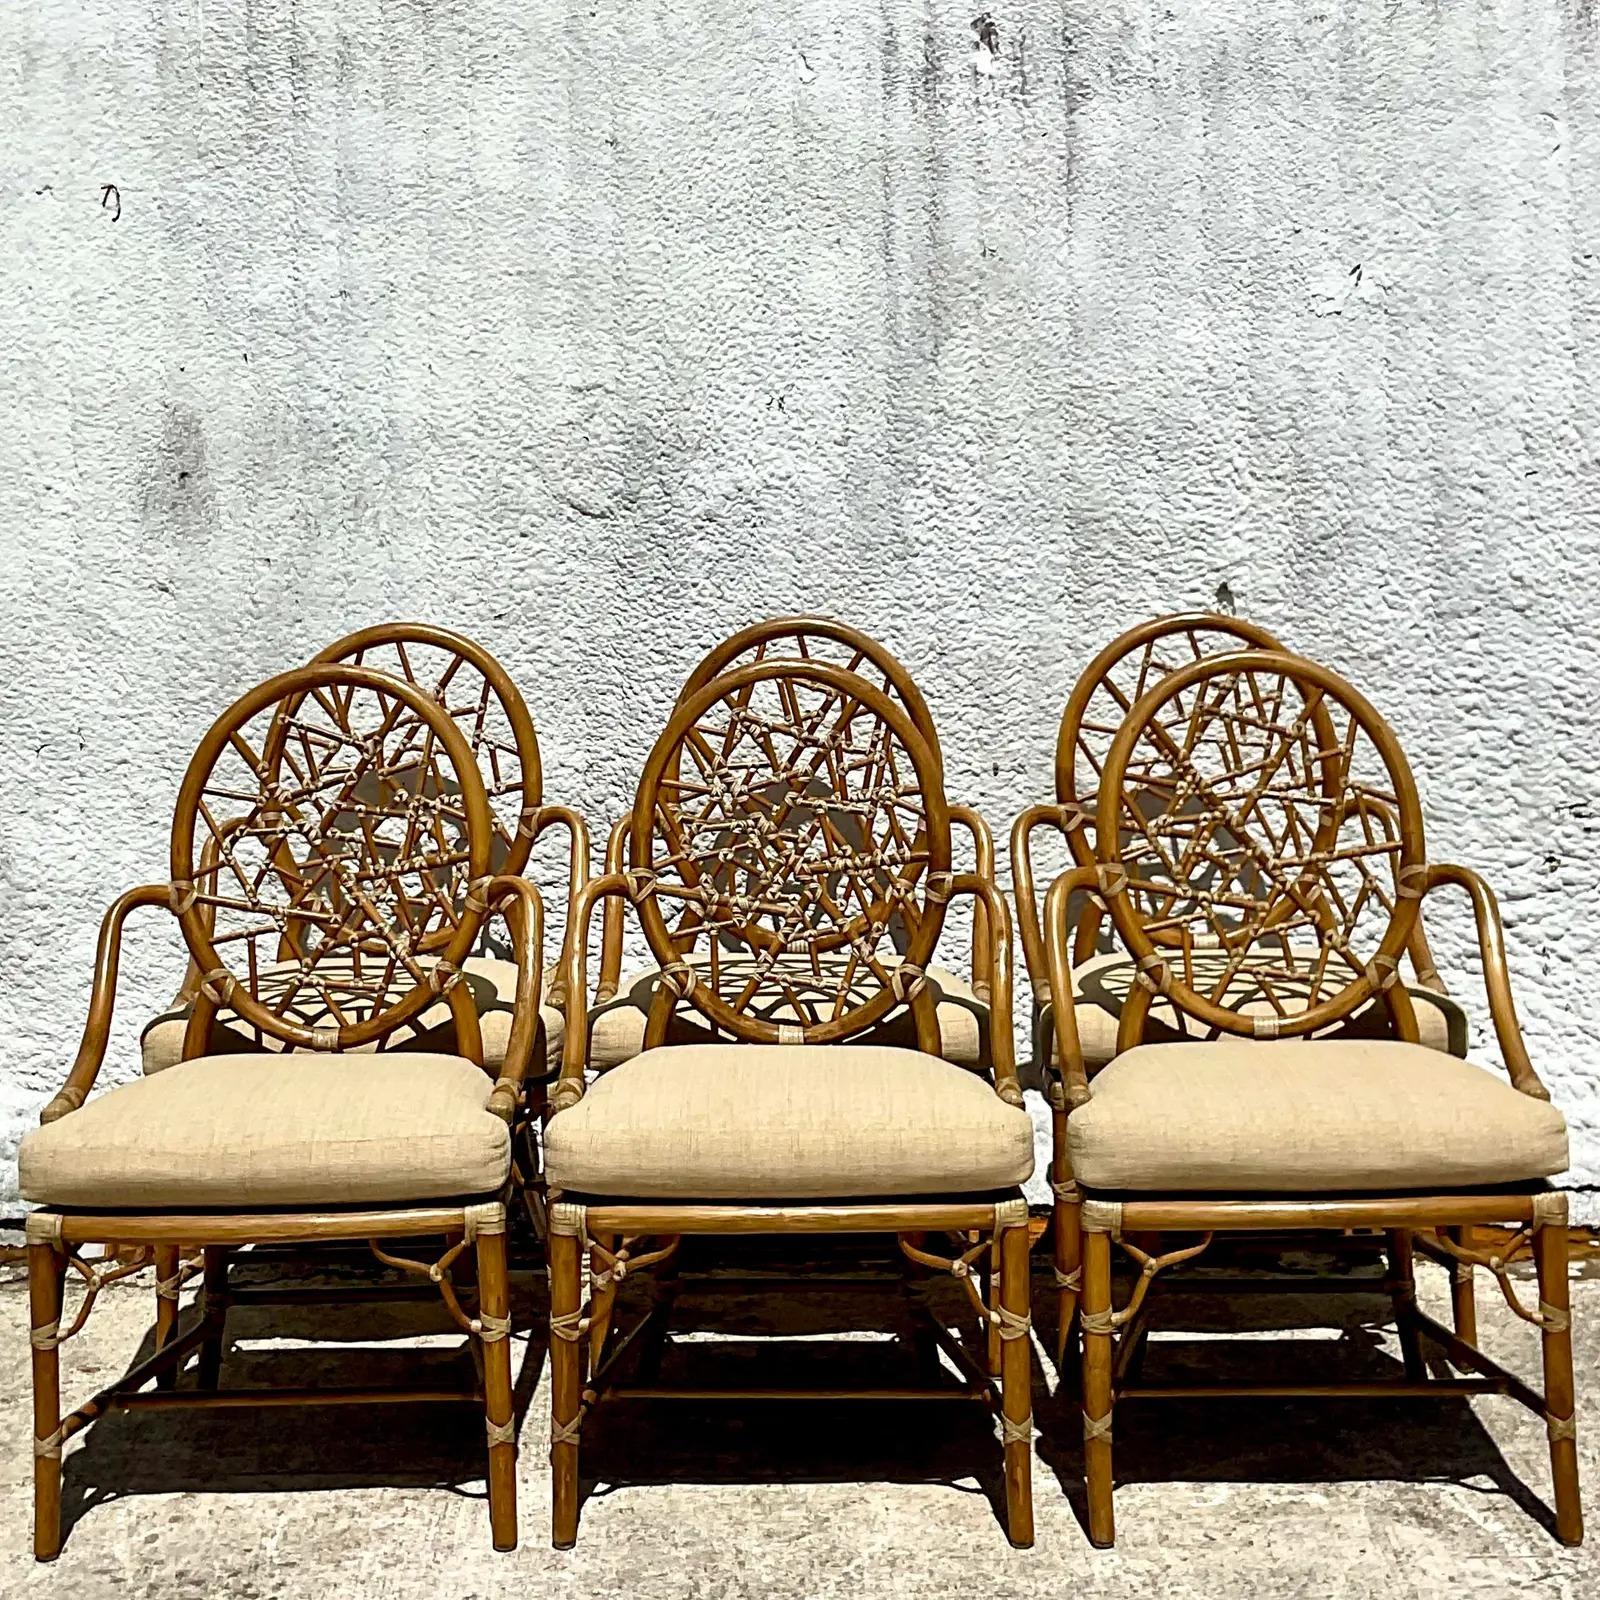 Vintage Coastal McGuire “Cracked Ice” Rattan Dining Chairs - Set of 6 6